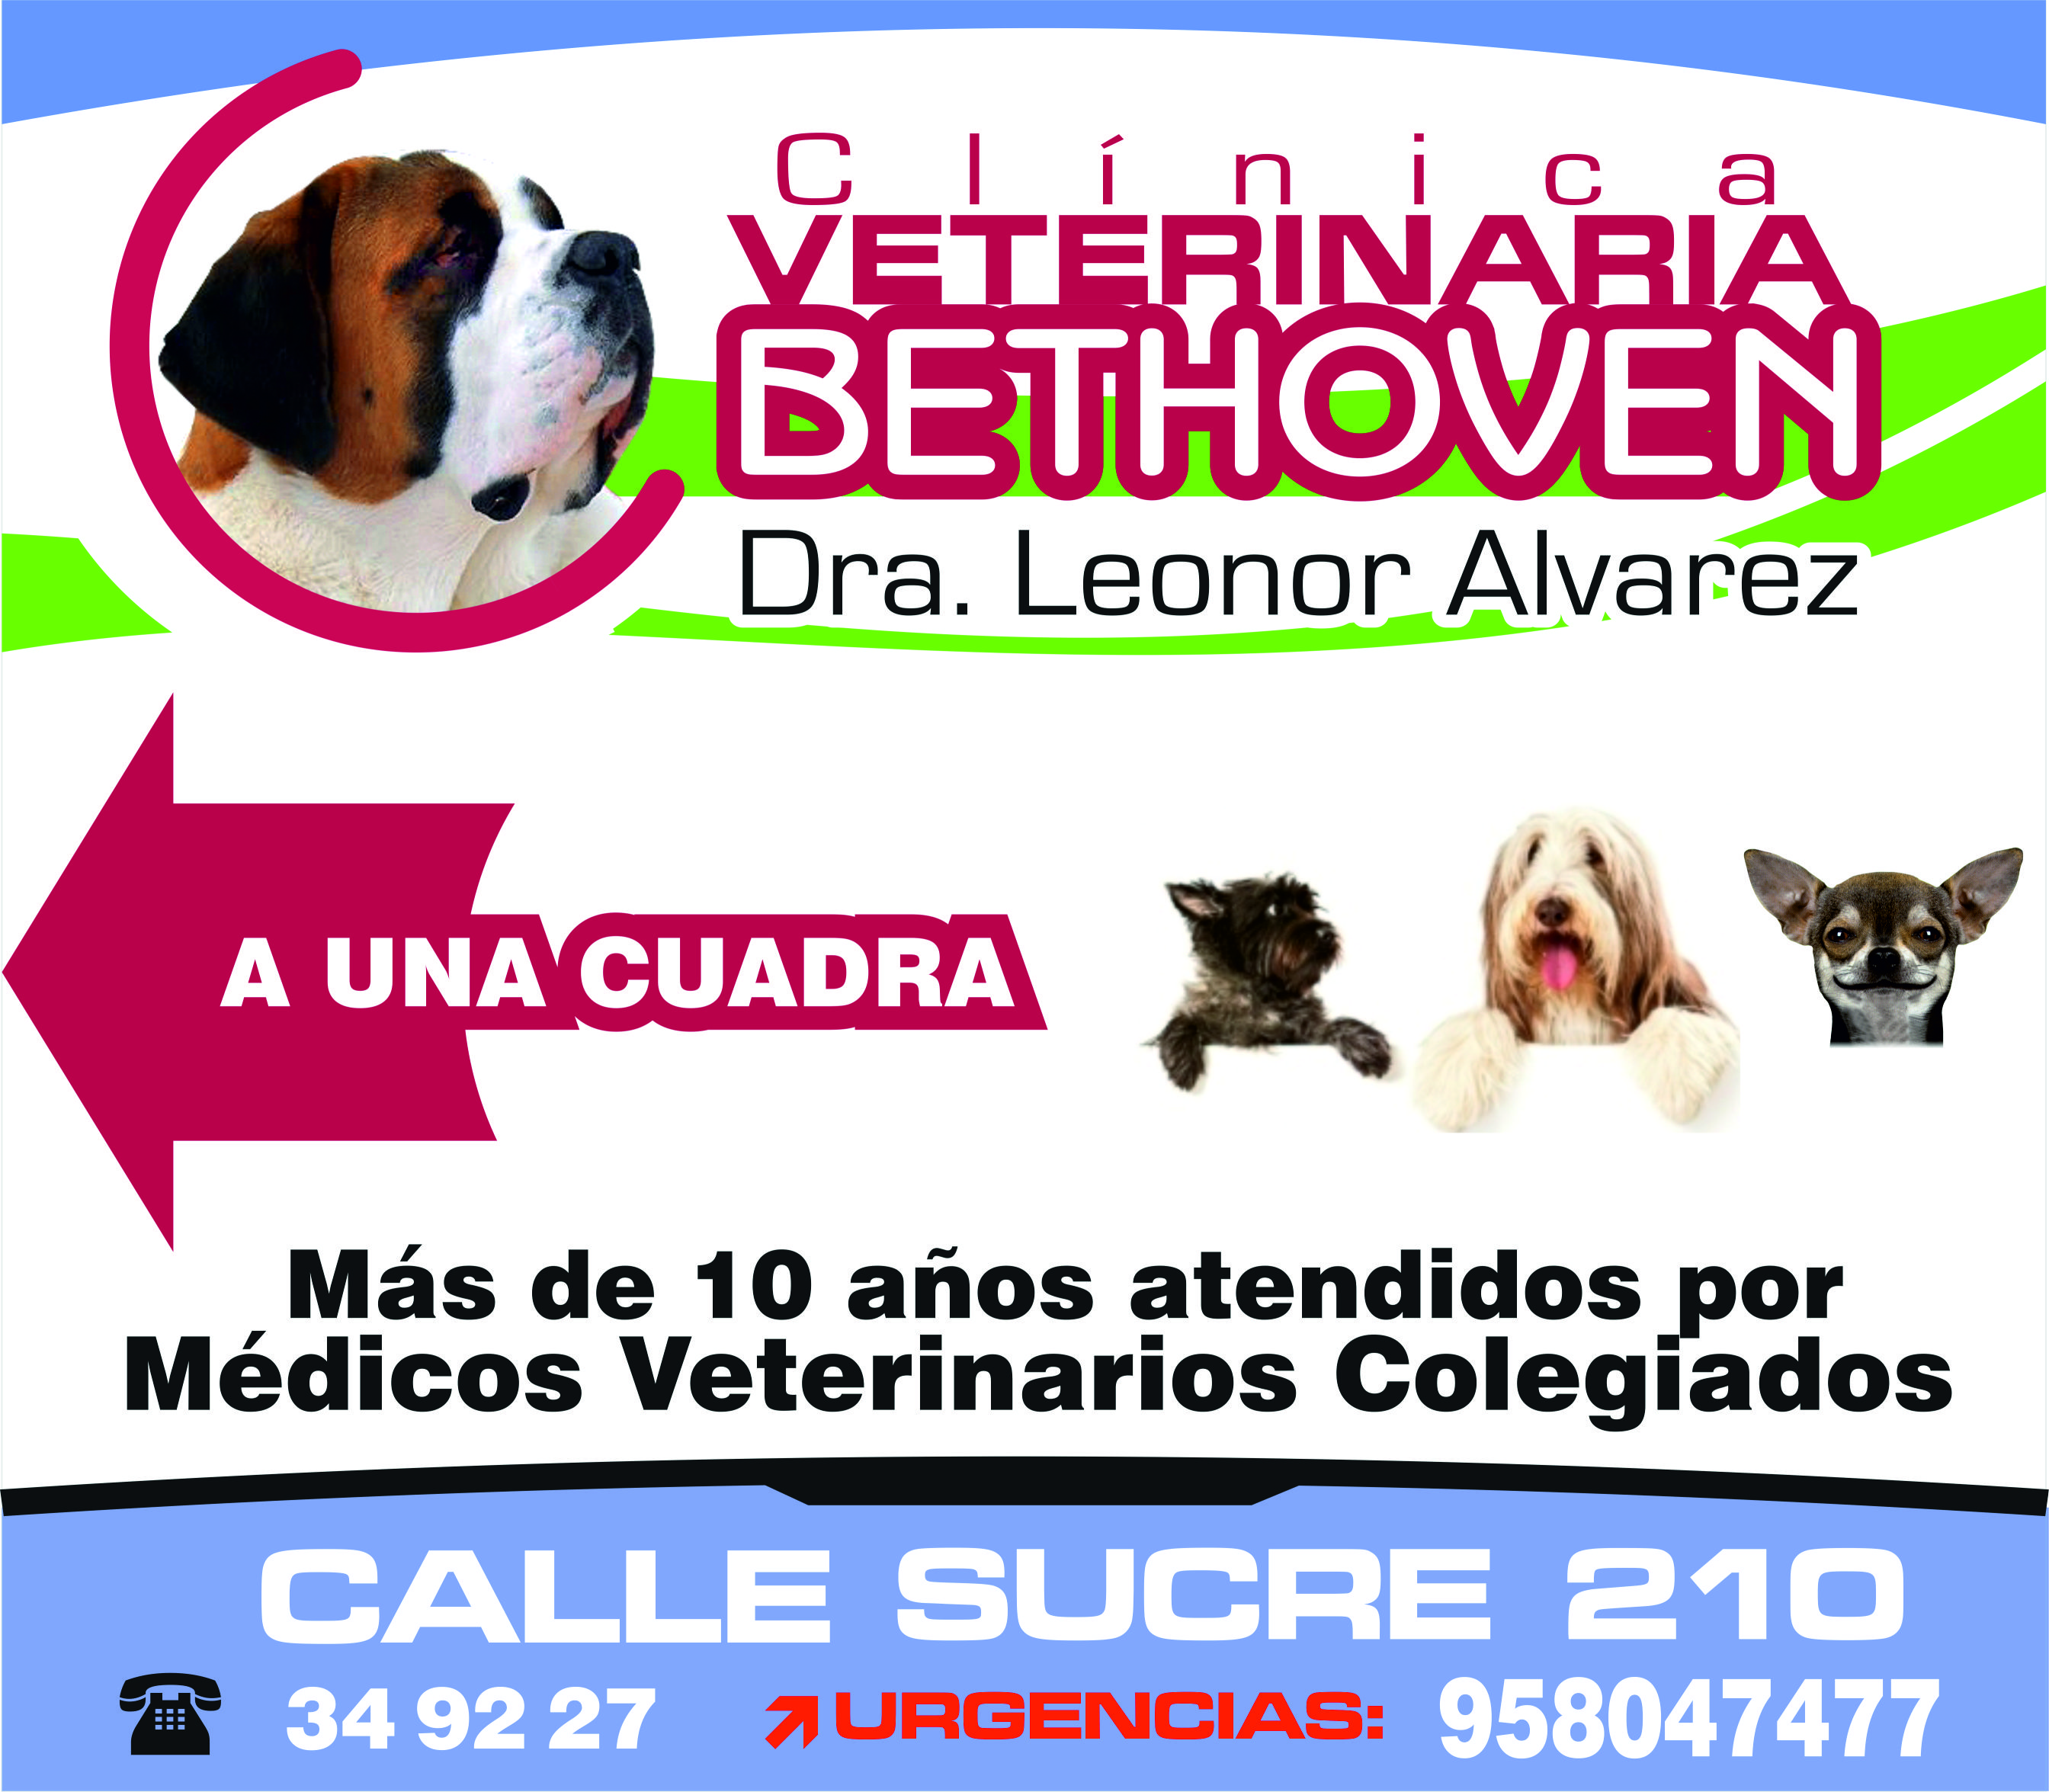 Veterinaria Bethoven logo